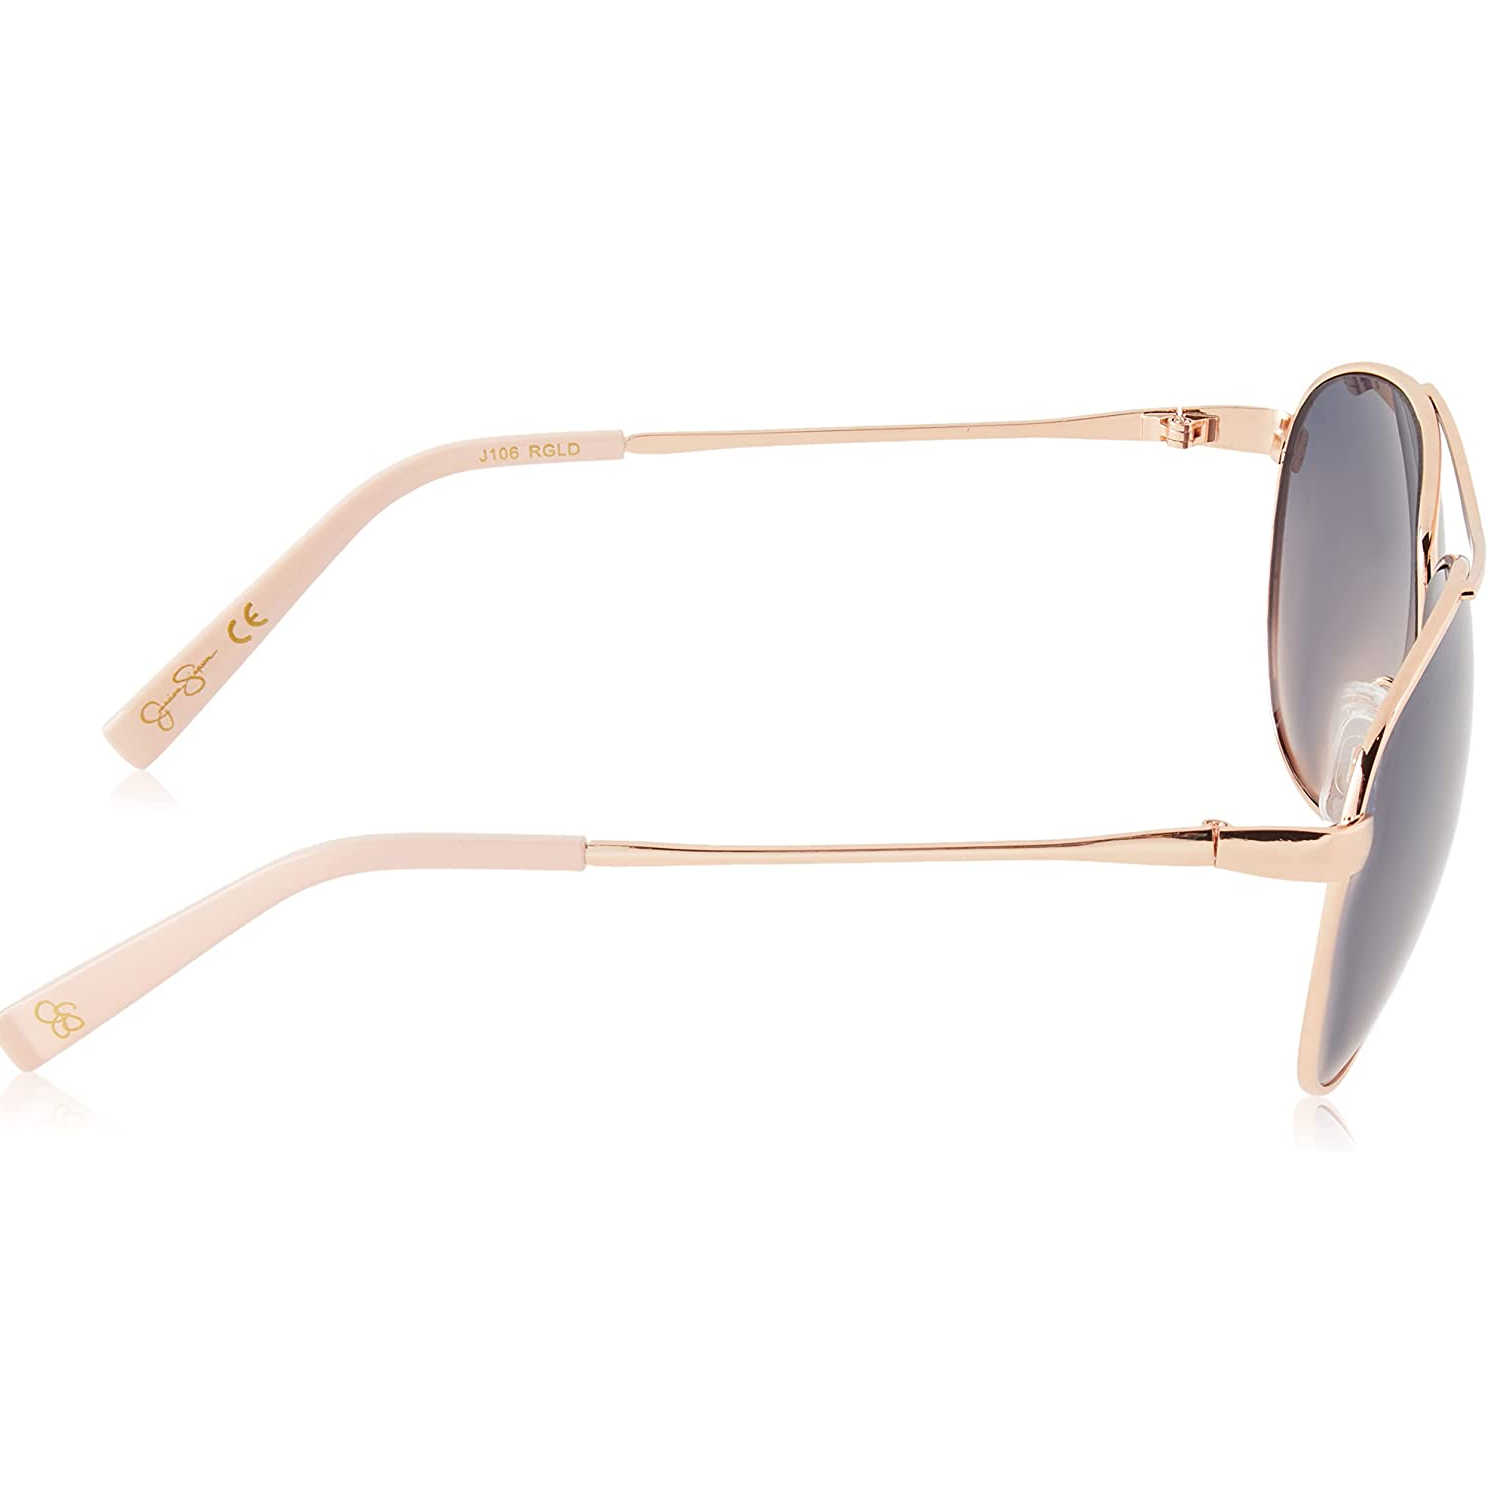 Jessica Simpson J106 Iconic Metal Aviator Sunglasses With UV Protection